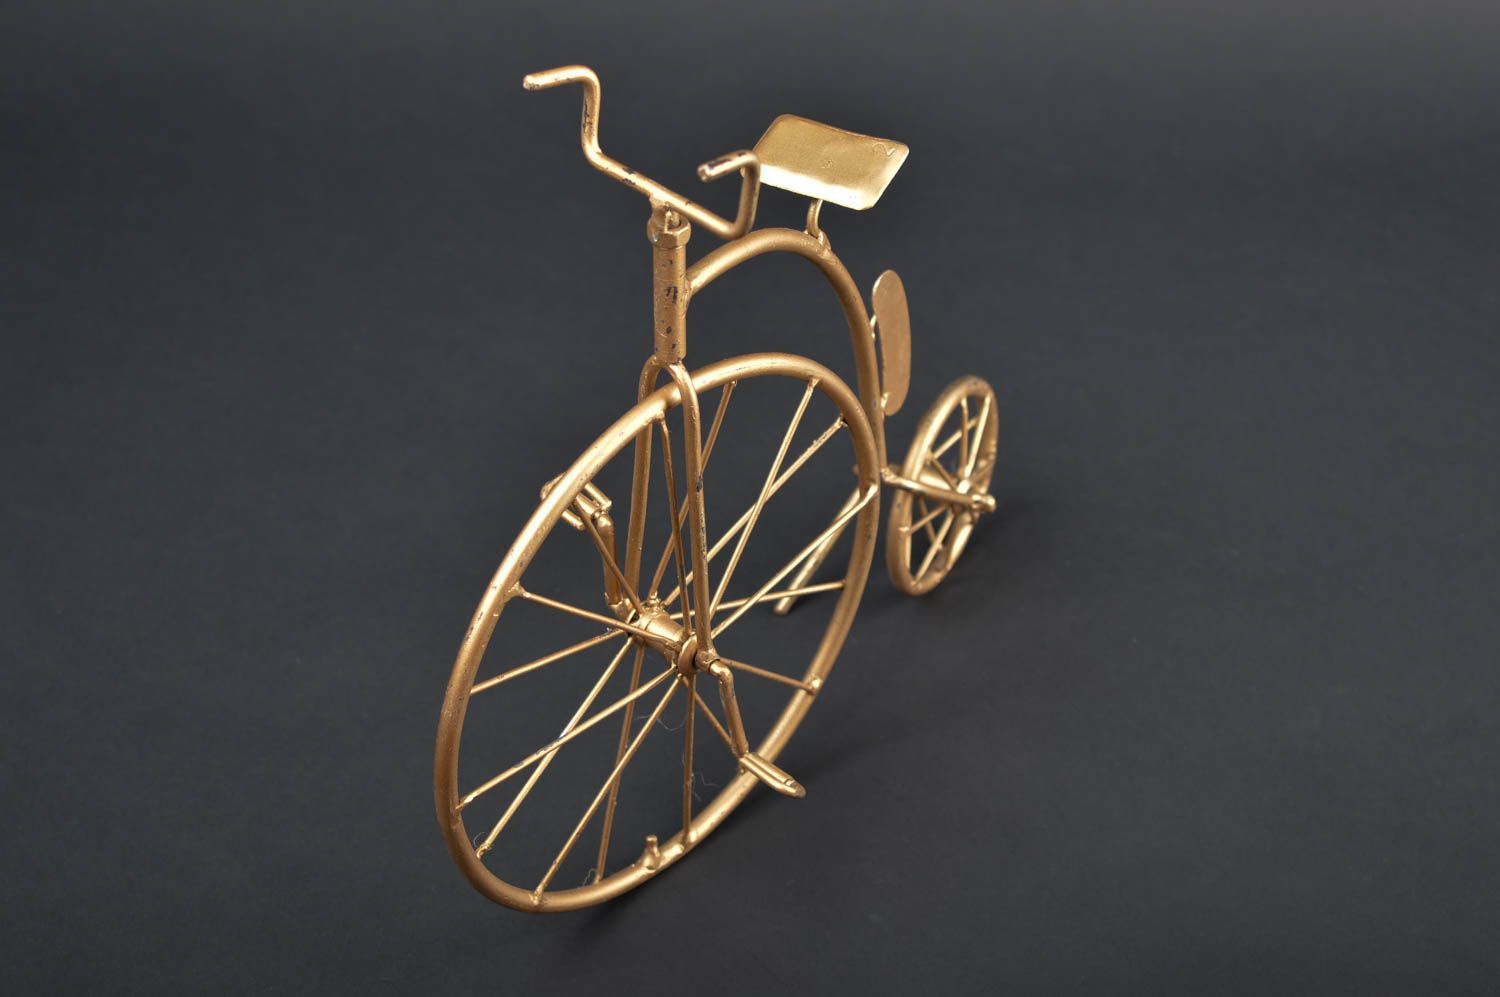 Handmade Deko Dekoration Figur ausgefallenes Geschenk Tischdeko Idee Fahrrad foto 1